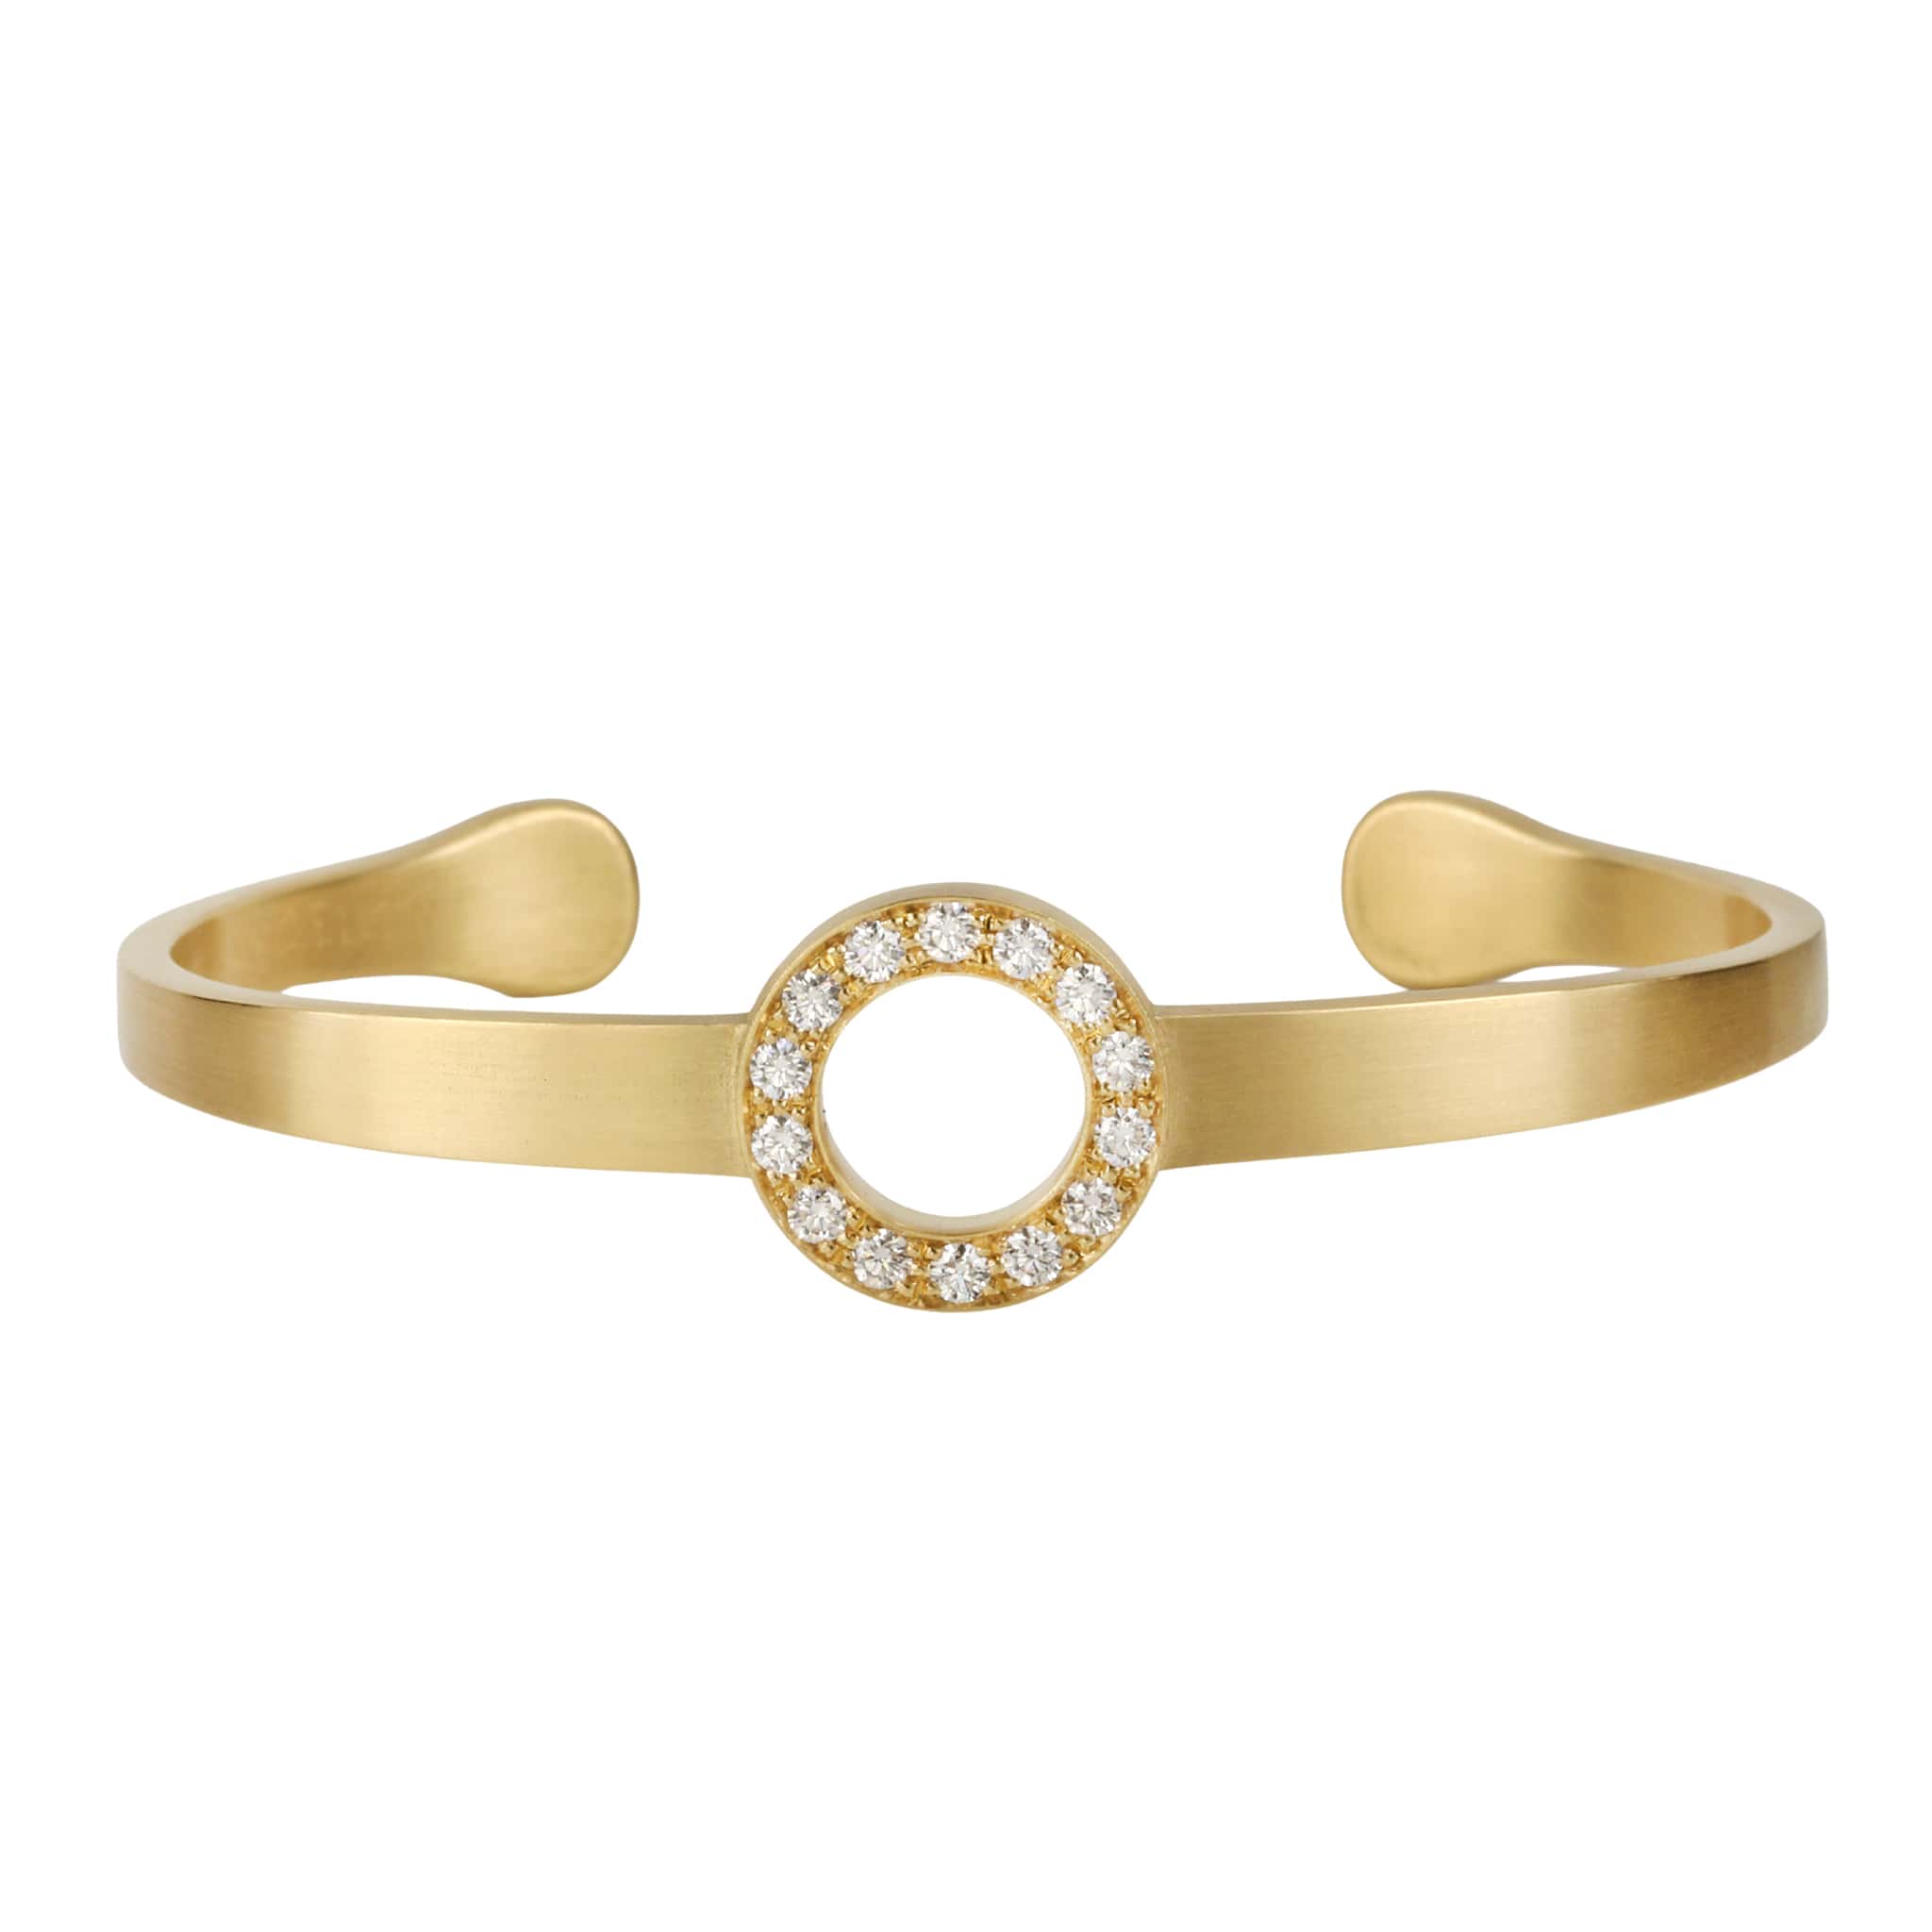 Caroline Ellen 18K Gold Cuff Bracelet with Round Pave Diamond Centerpiece